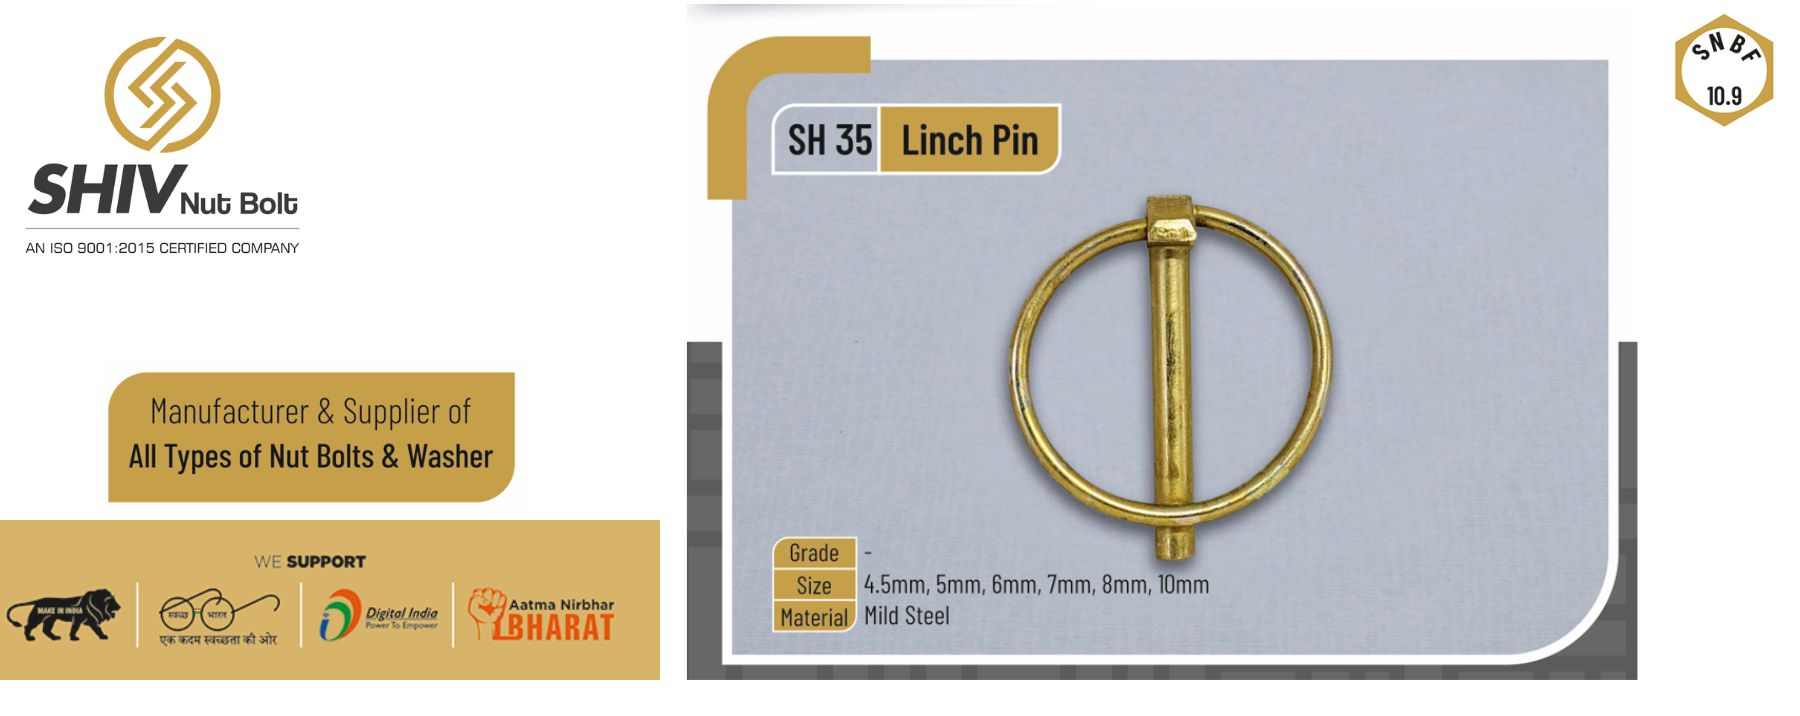 Linch Pin